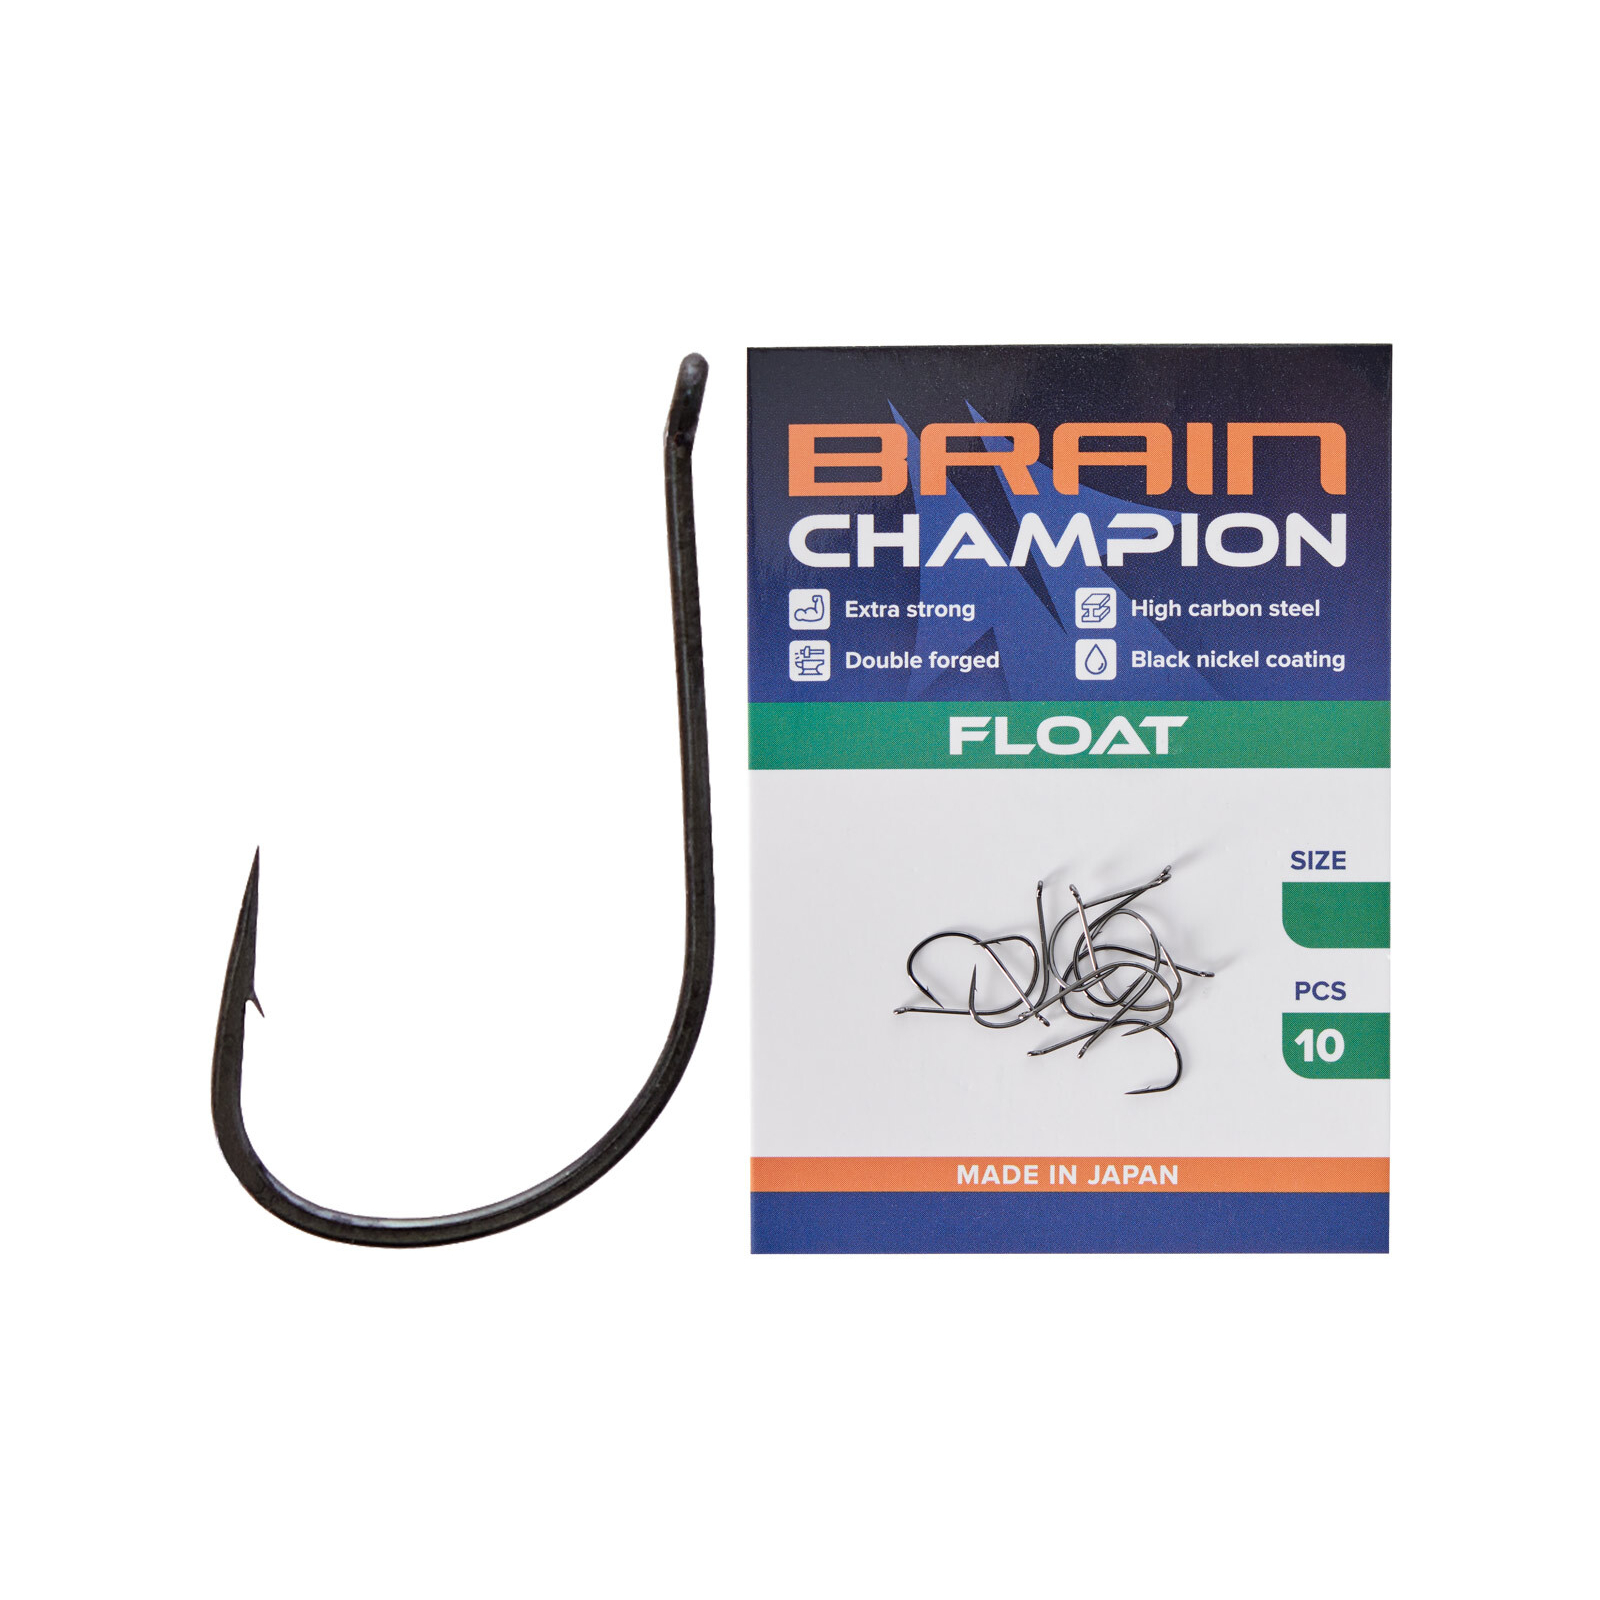 Гачок Brain fishing Champion Float 6 (10 шт/уп) (1858.54.62)